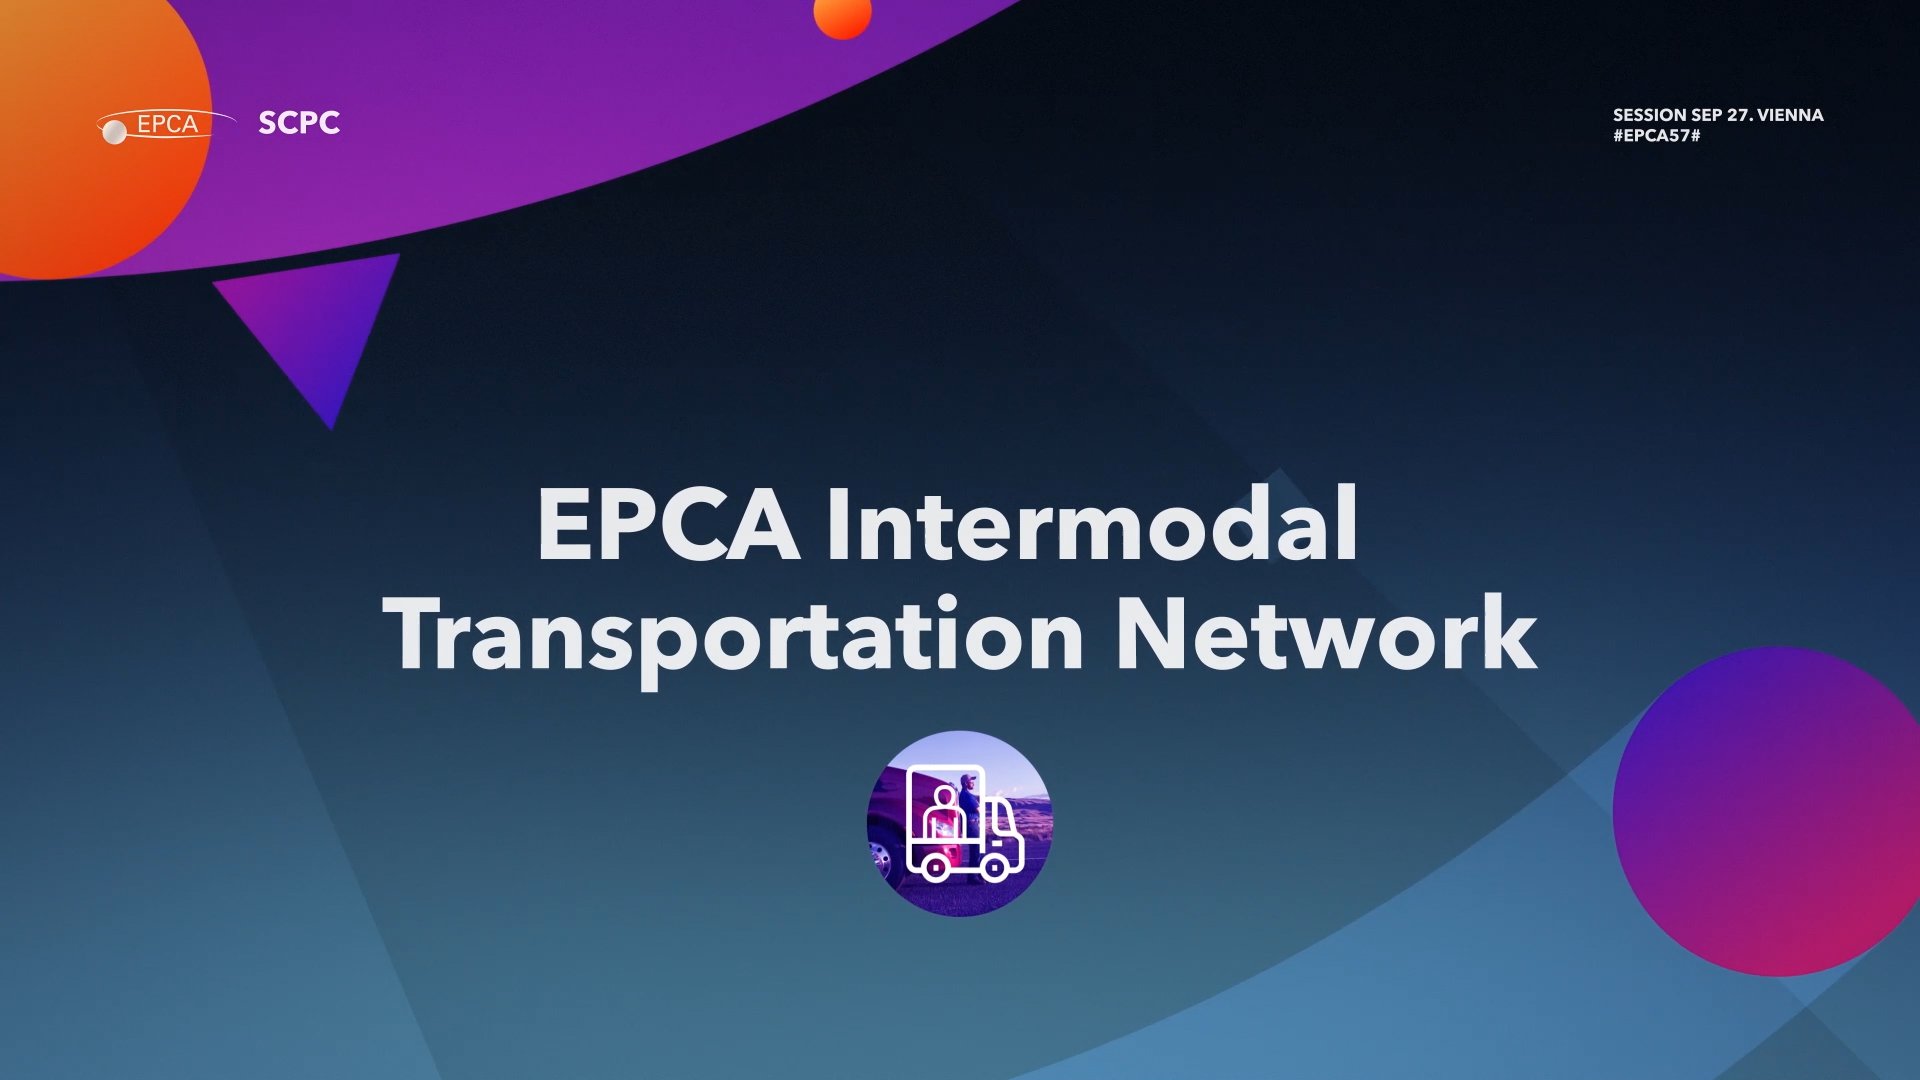 EPCA Intermodal Transportation Network (EPCA ITN)